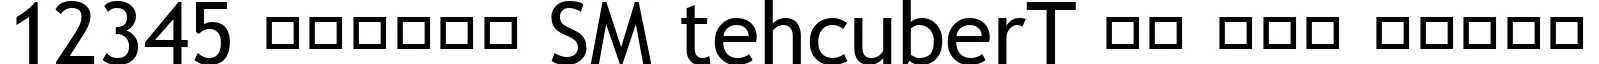 Dynamic Trebuchet MS Font Preview https://safirsoft.com